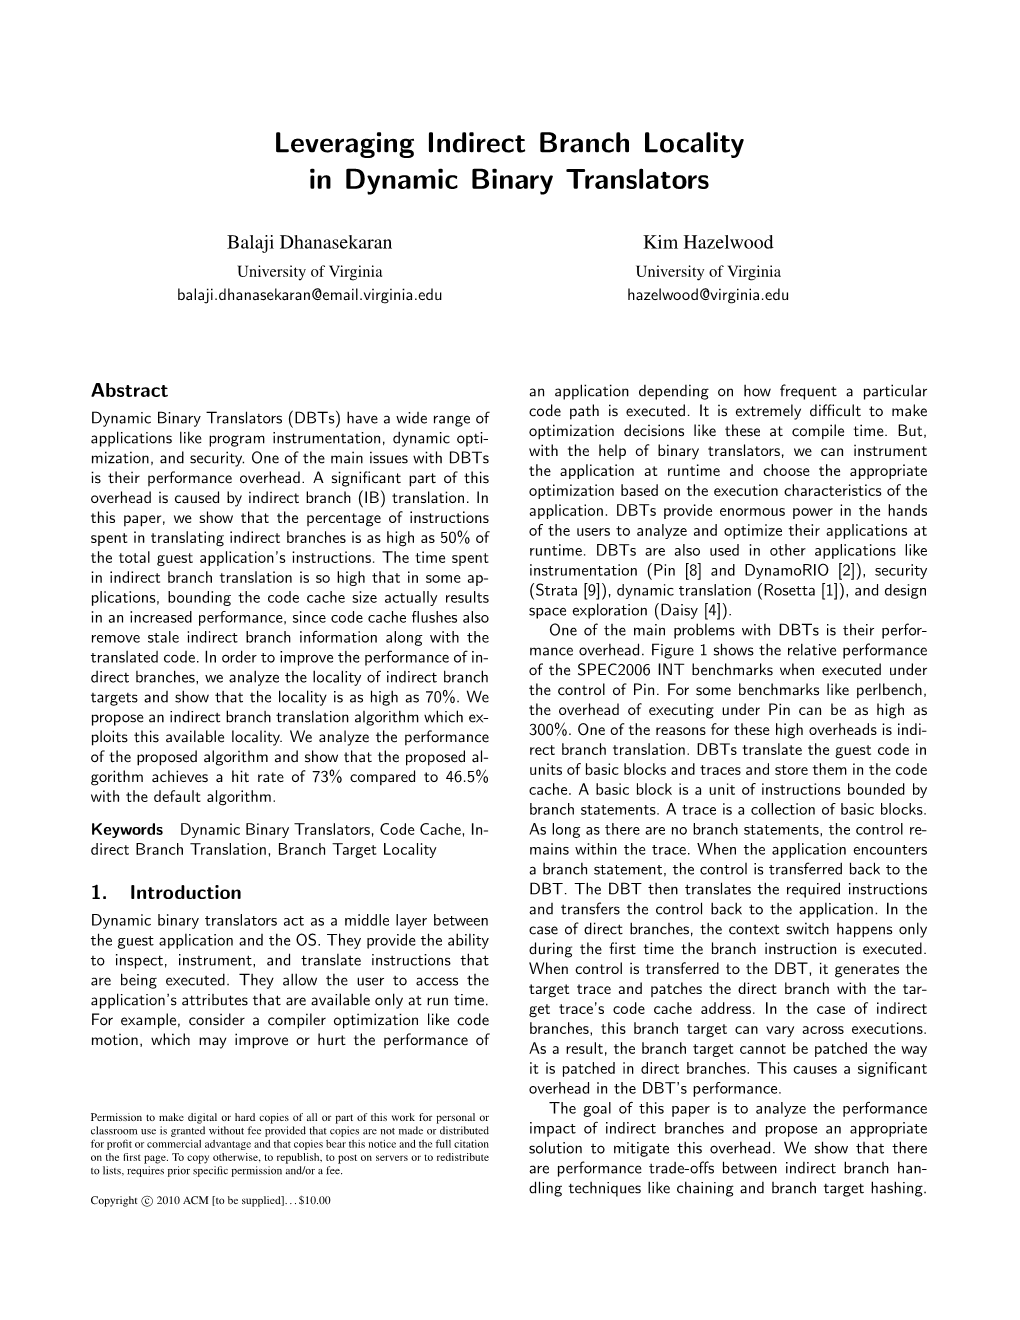 Leveraging Indirect Branch Locality in Dynamic Binary Translators